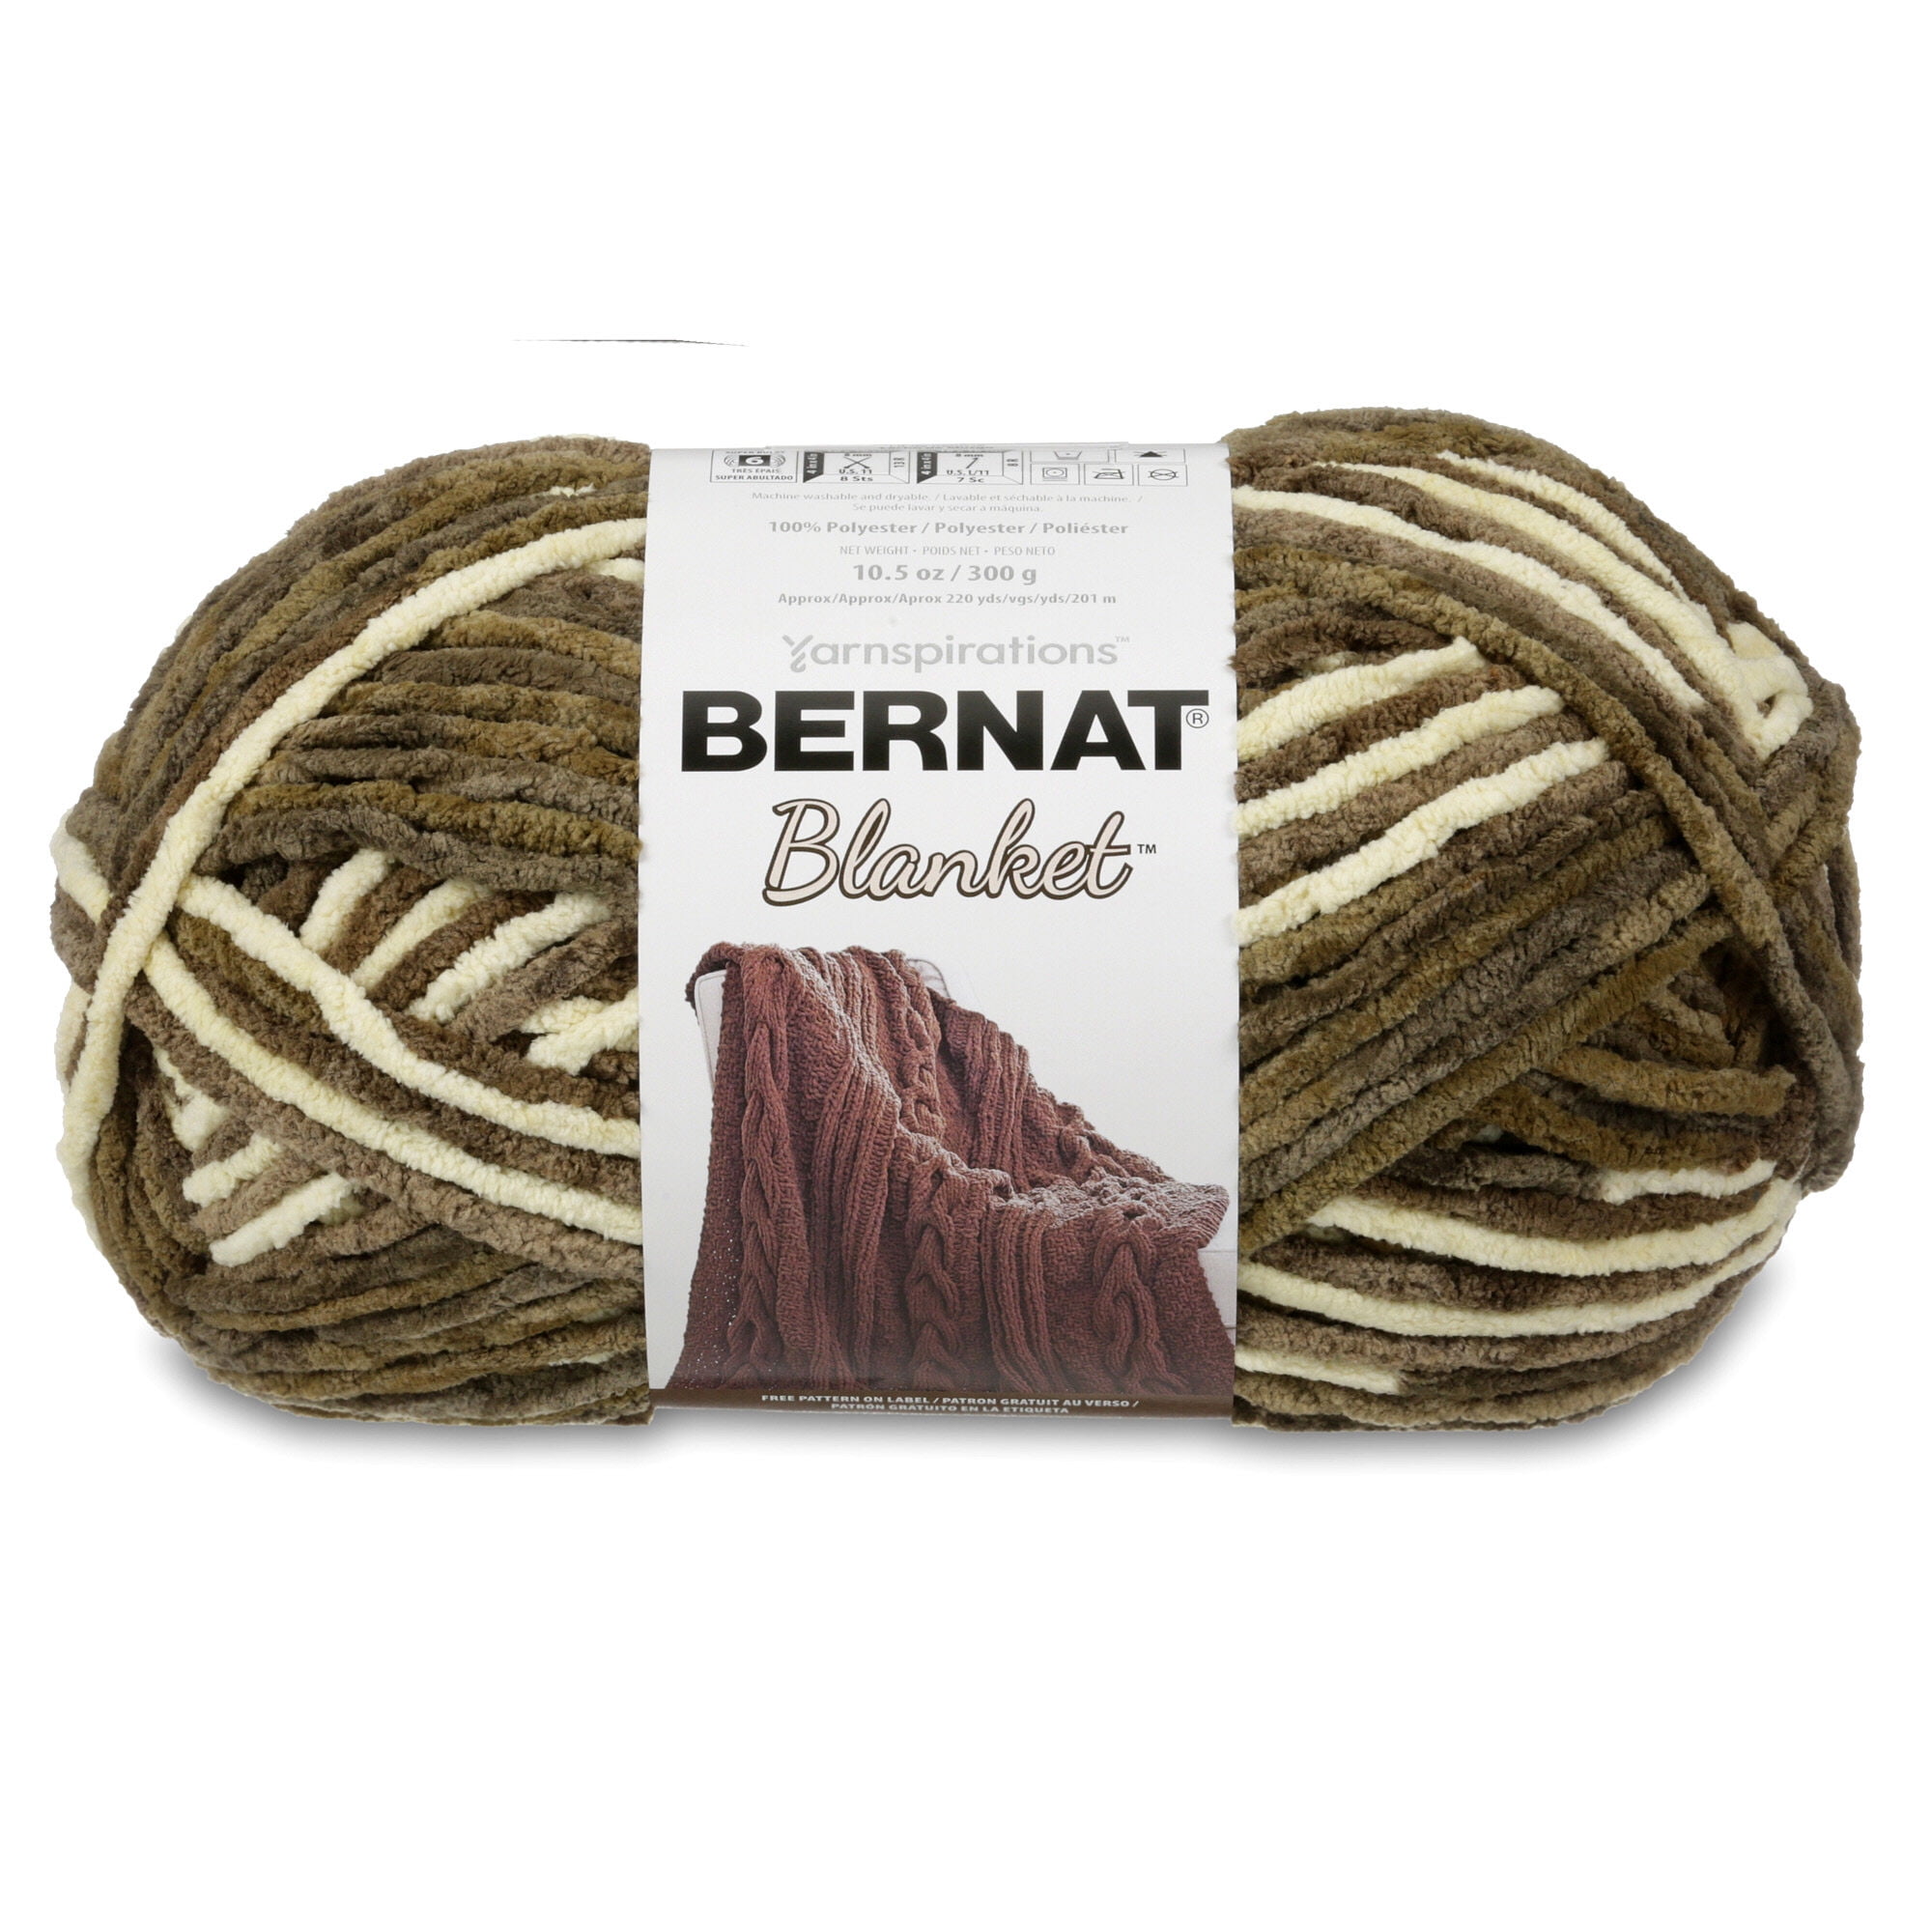 Bernat Blanket Big Ball Yarn Size 6-Horizon